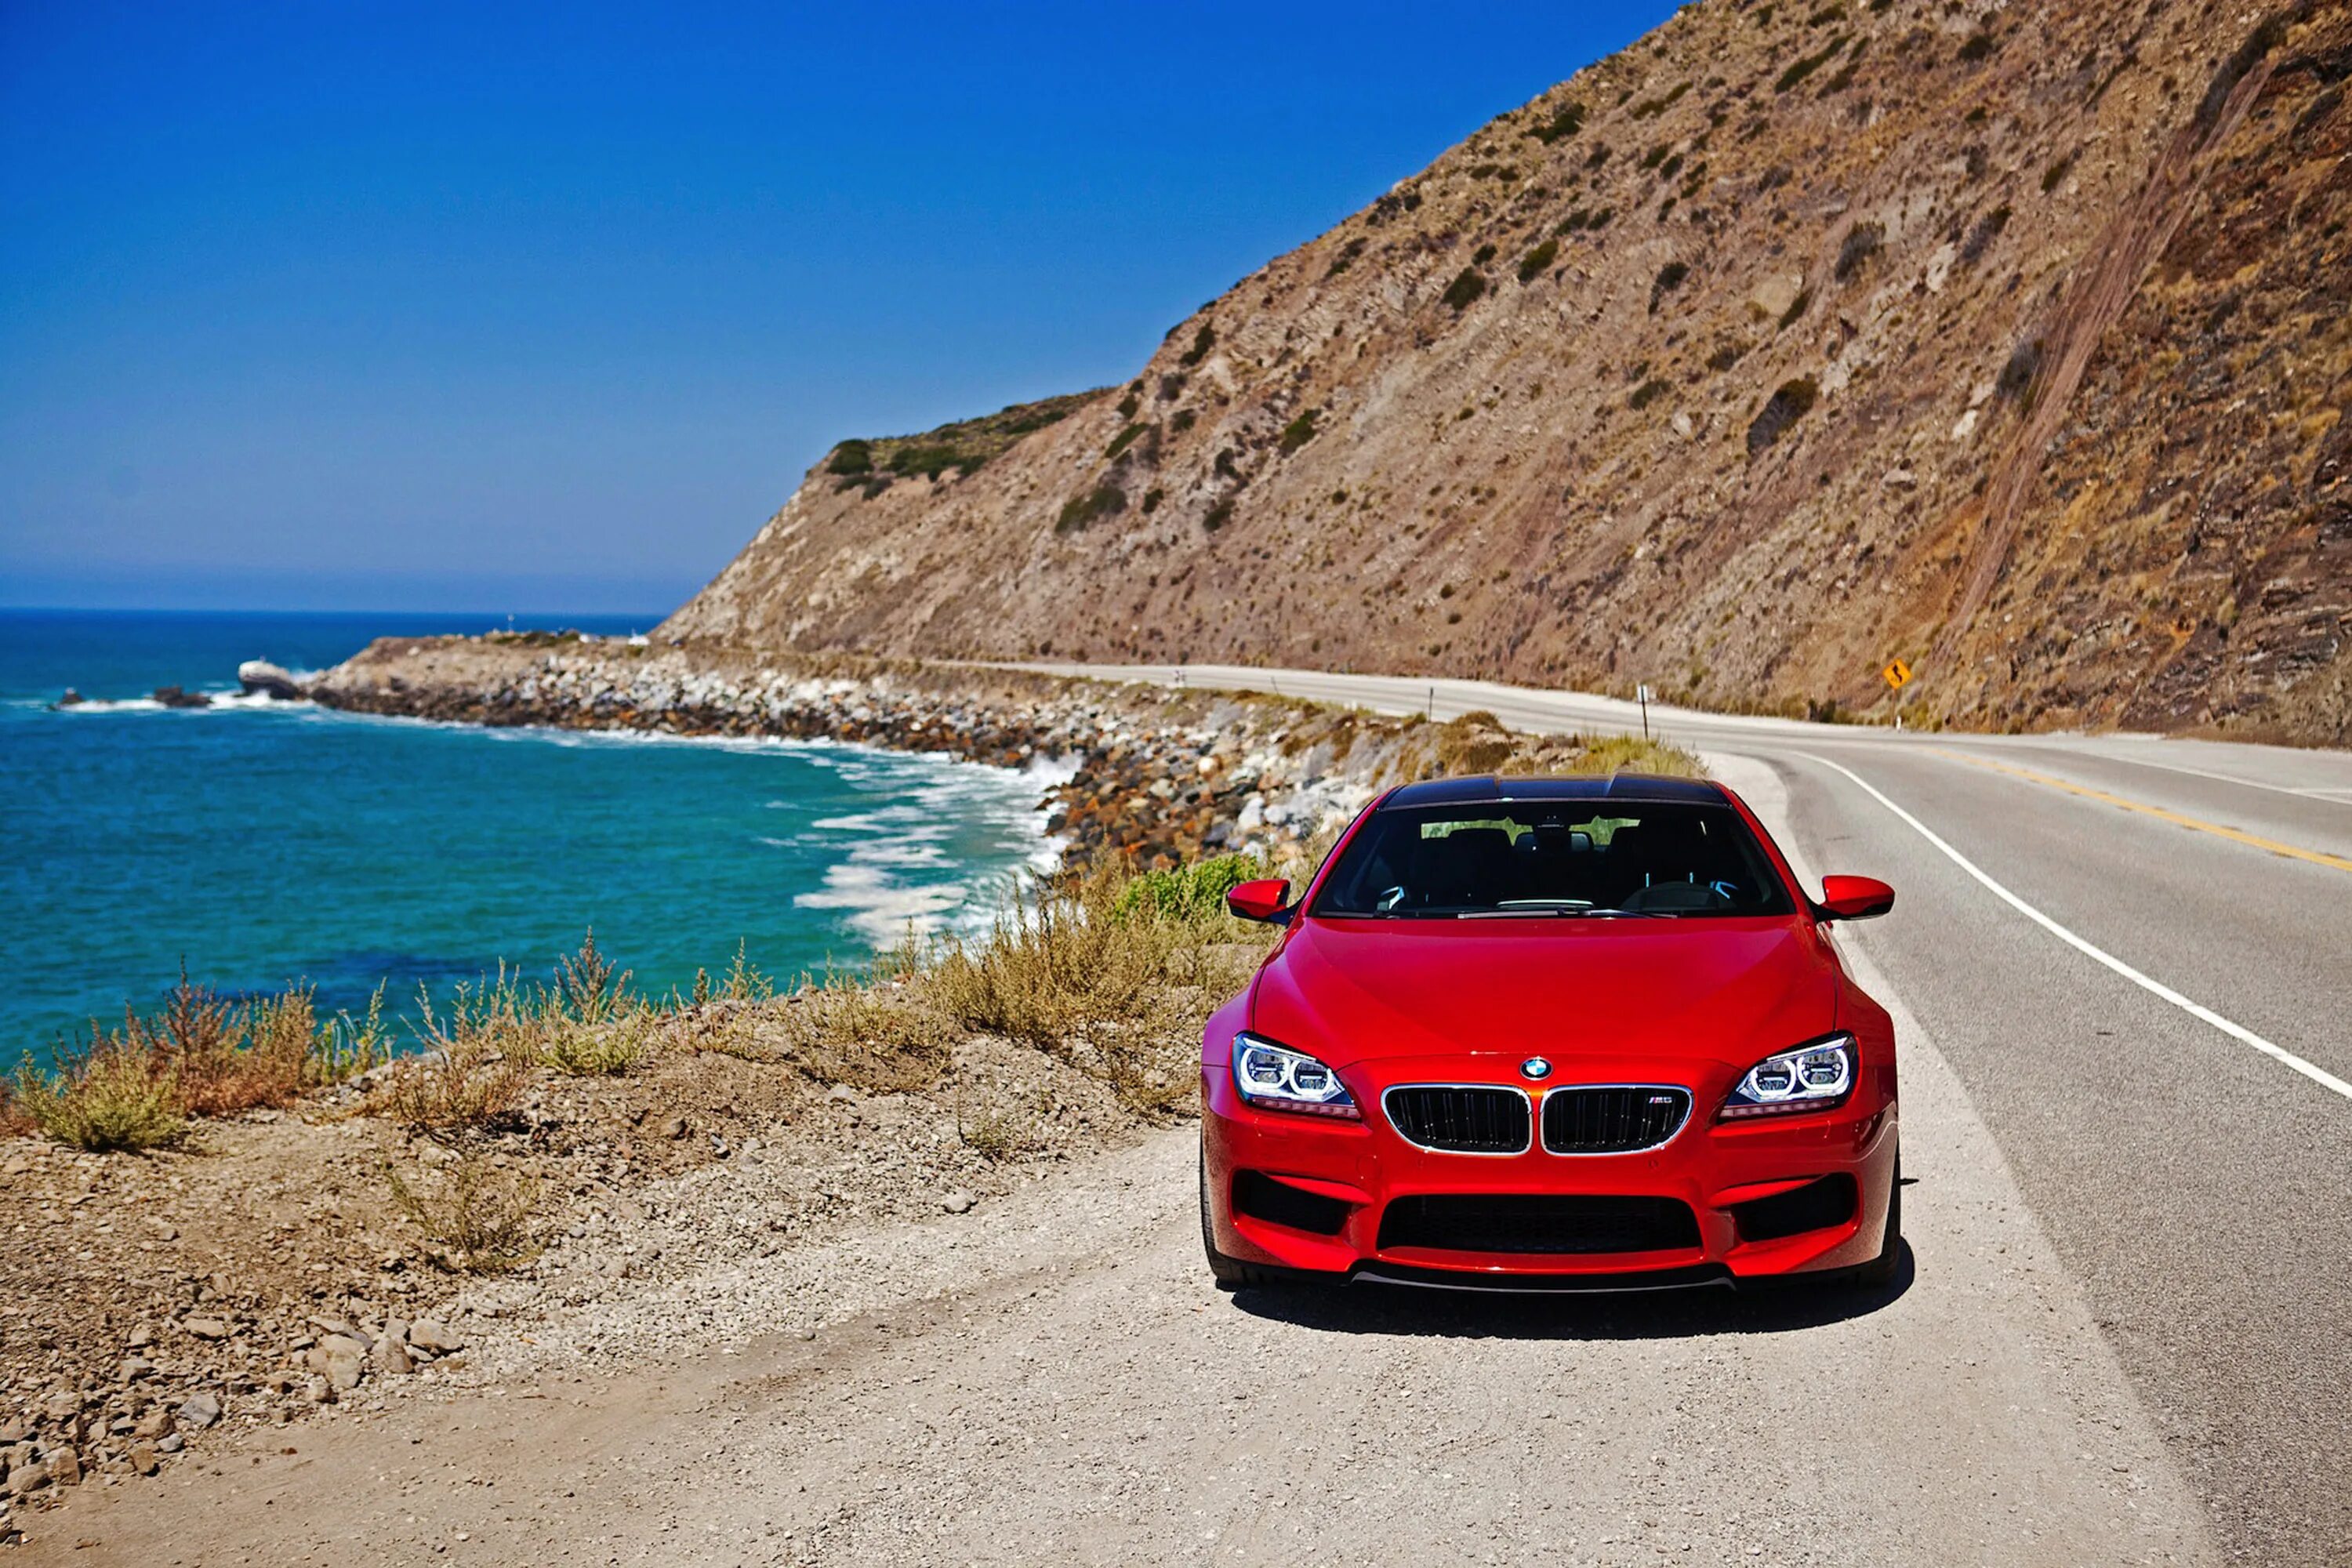 BMW m5 море. BMW m5 возле виллы. БМВ м5 на море. Машина на фоне моря. Красивые машины лето